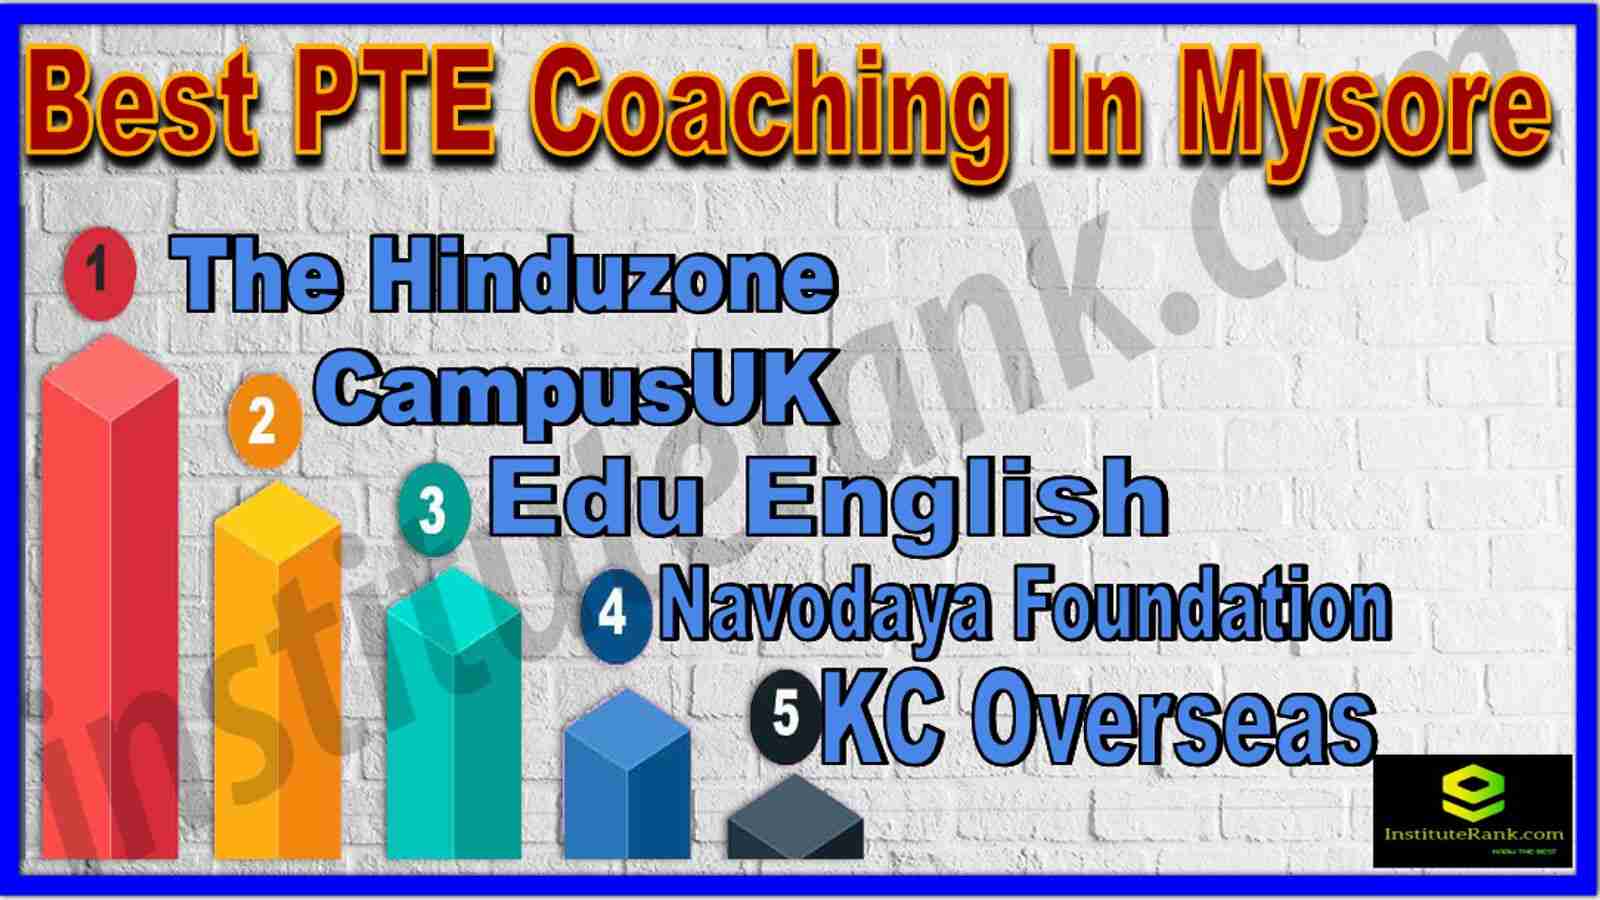 Best PTE Coaching In Mysore